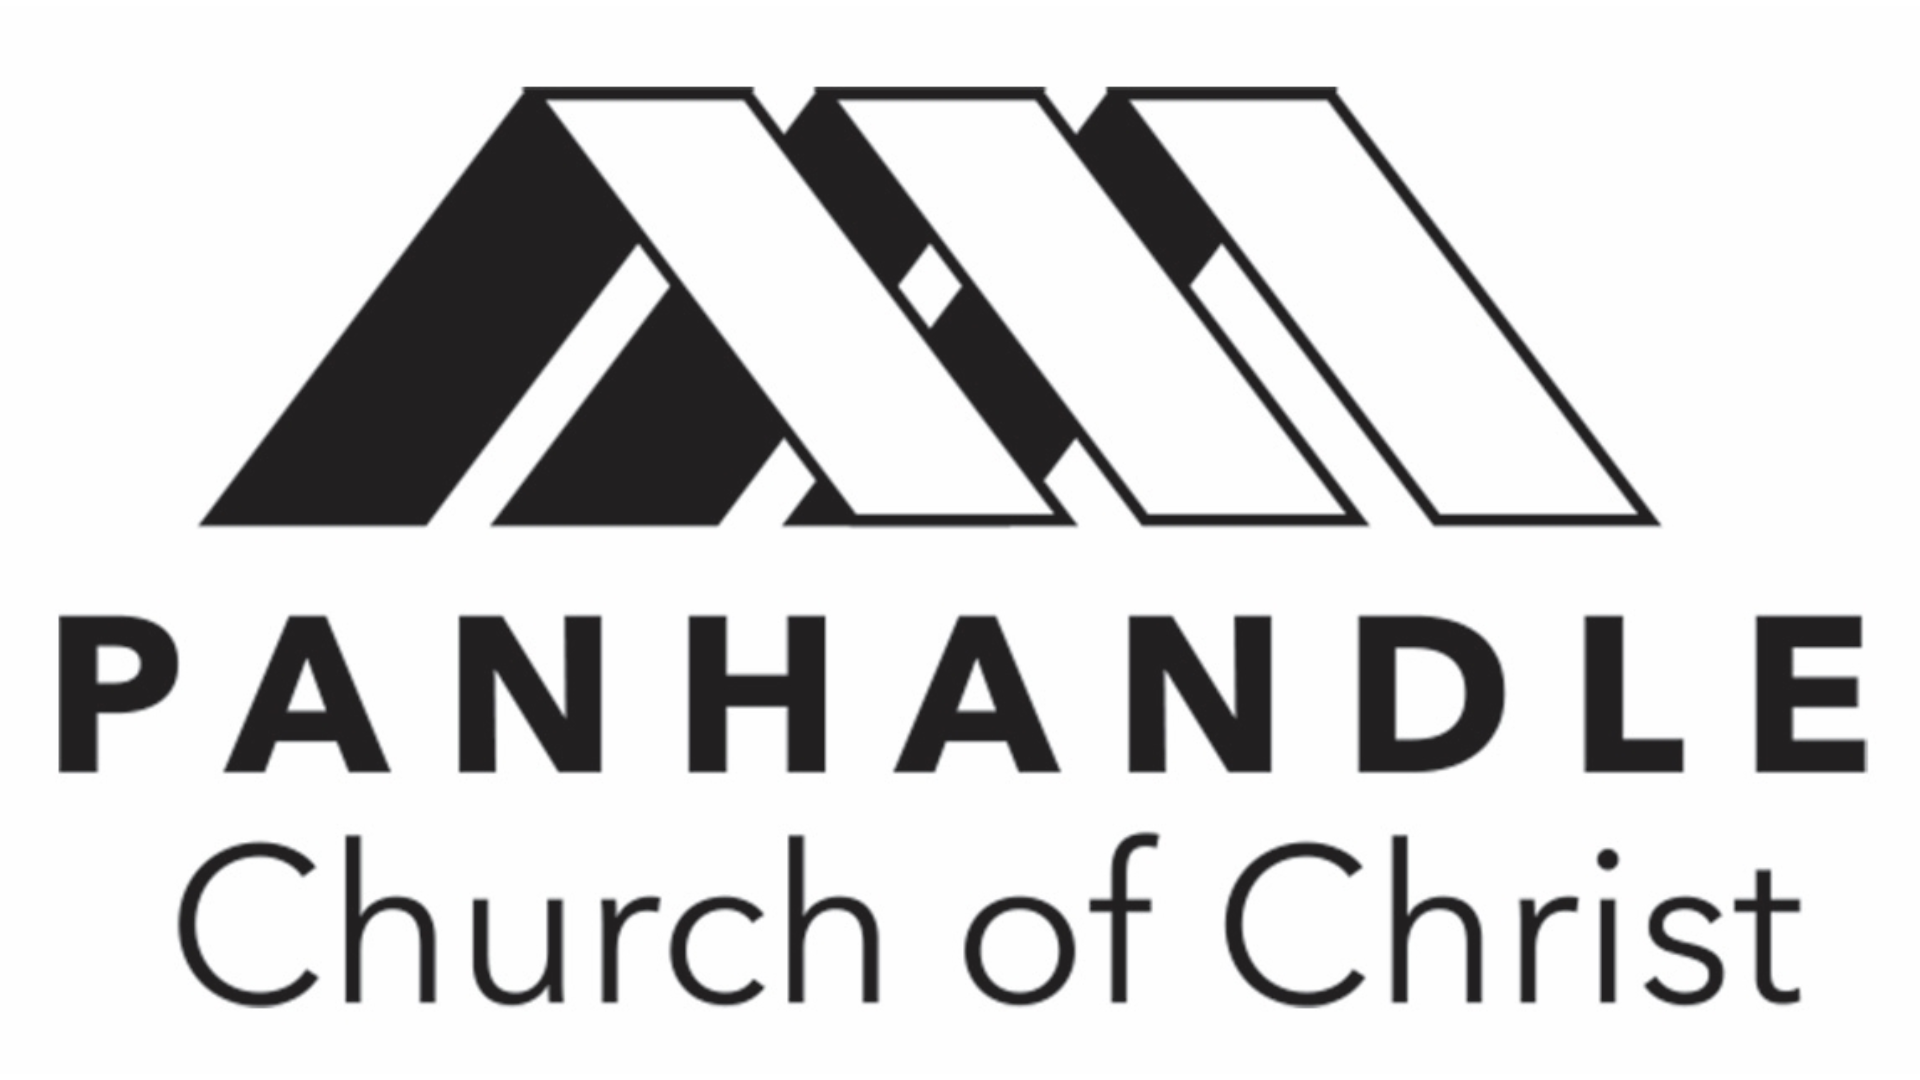 Panhandle Church of Christ